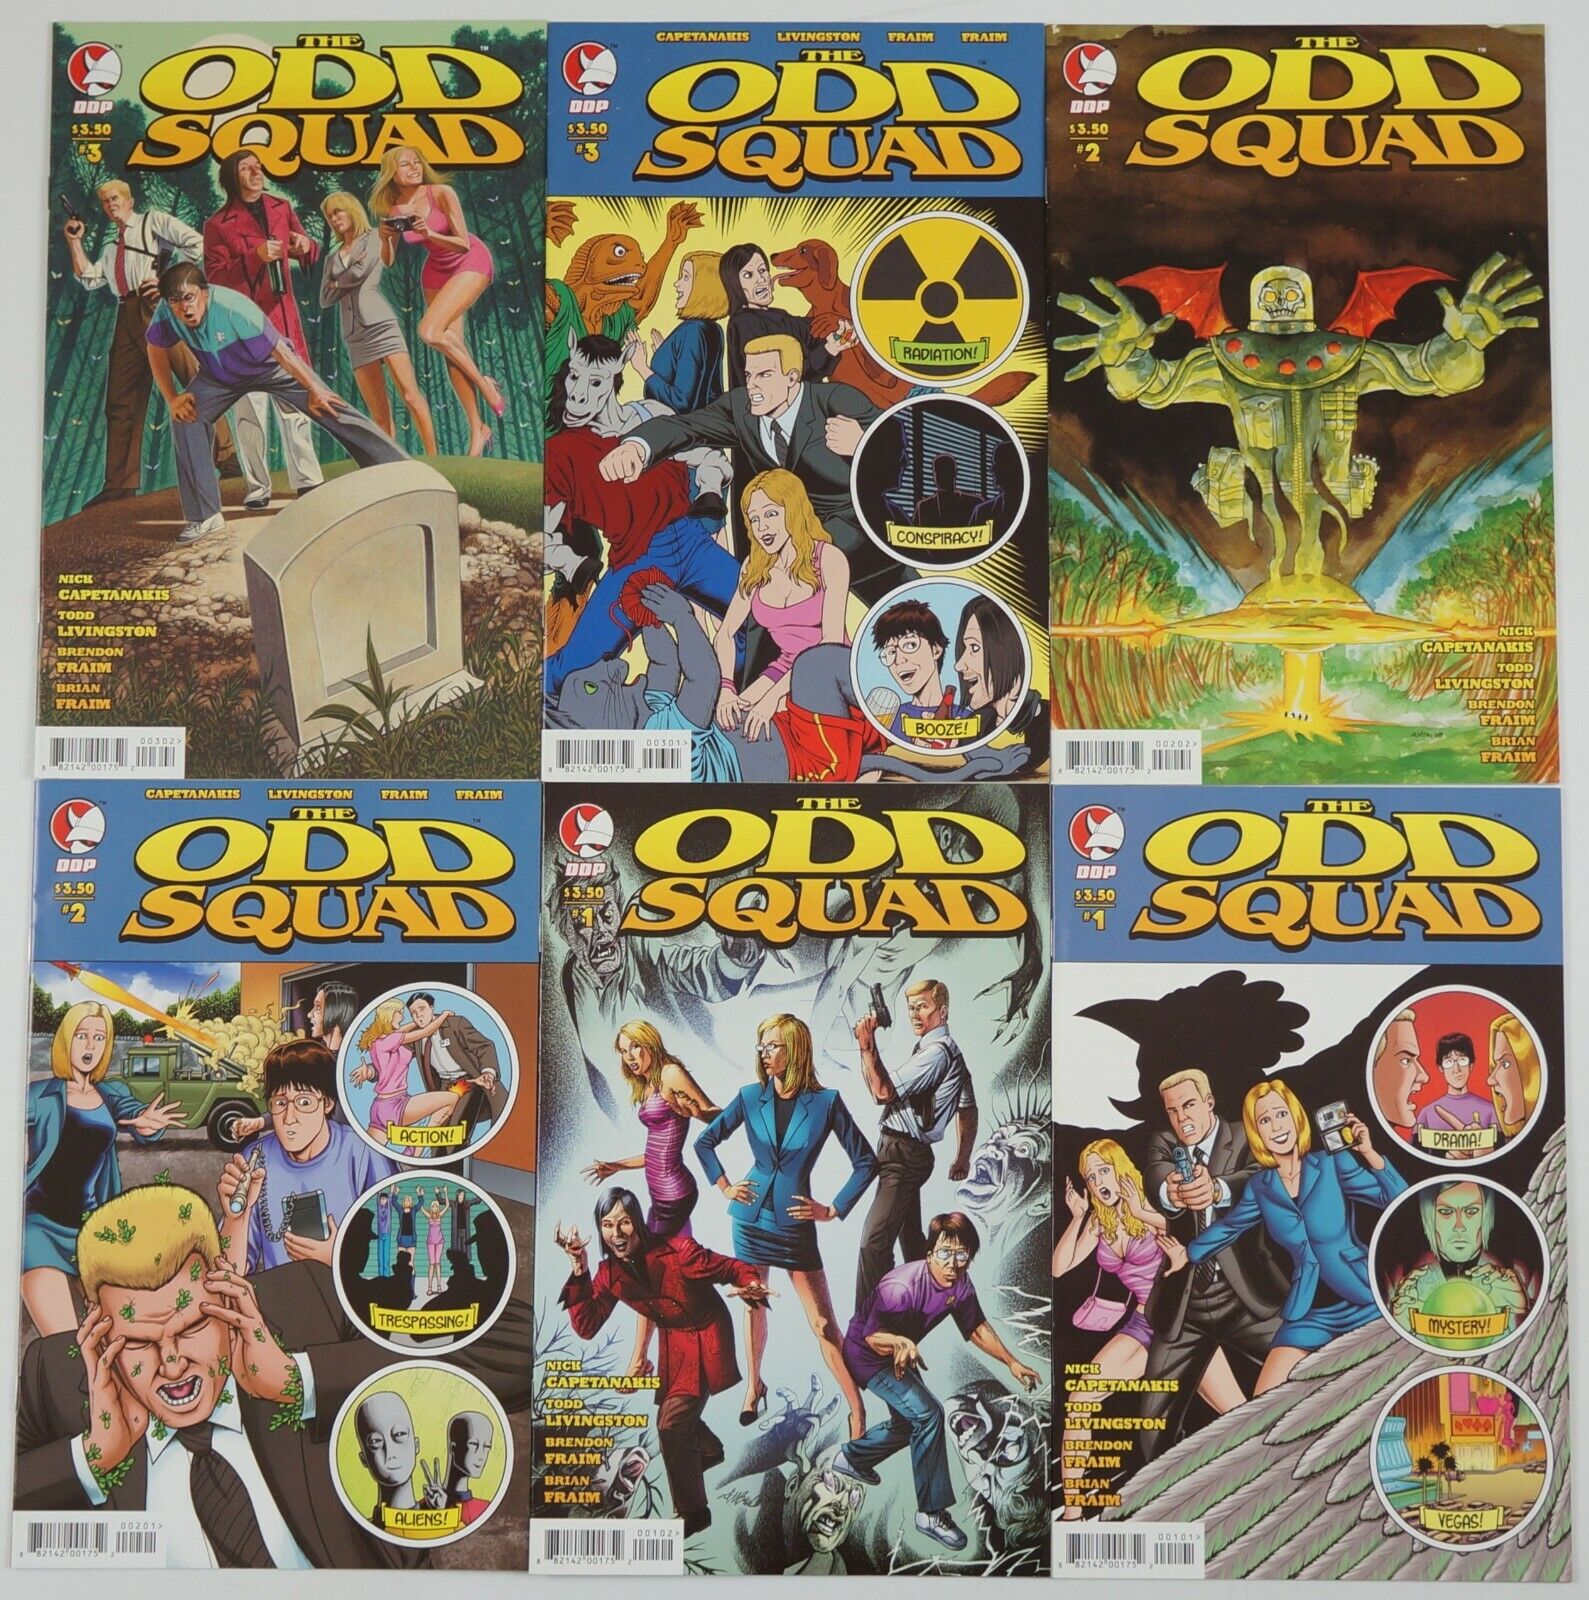 Odd Squad #1-3 VF/NM complete series + all (3) variants - Michael Avon Oeming